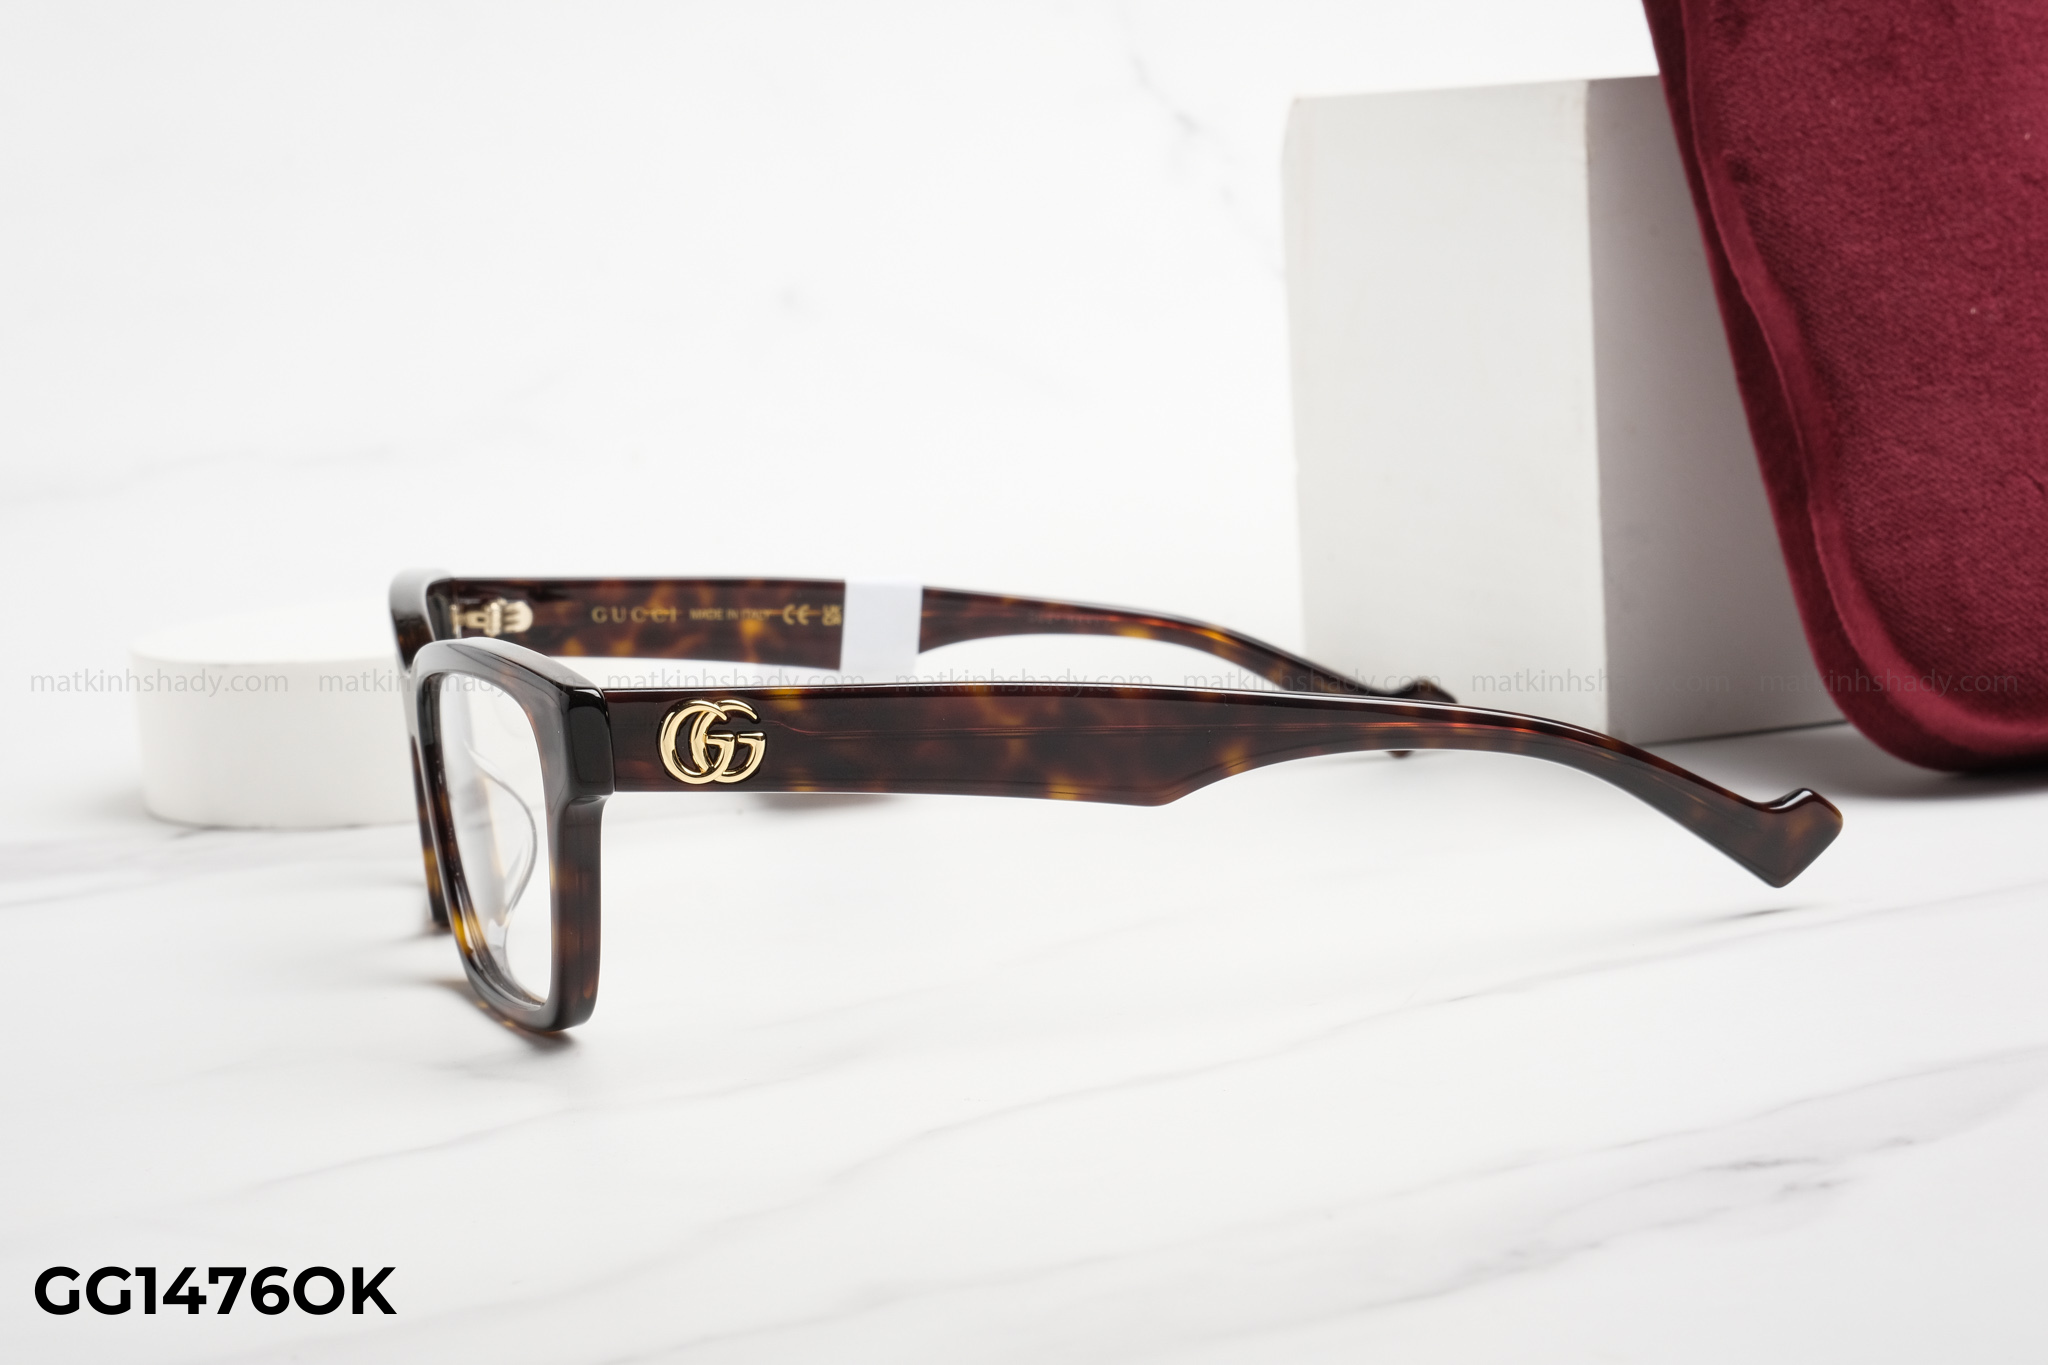  Gucci Eyewear - Glasses - GG1476OK 